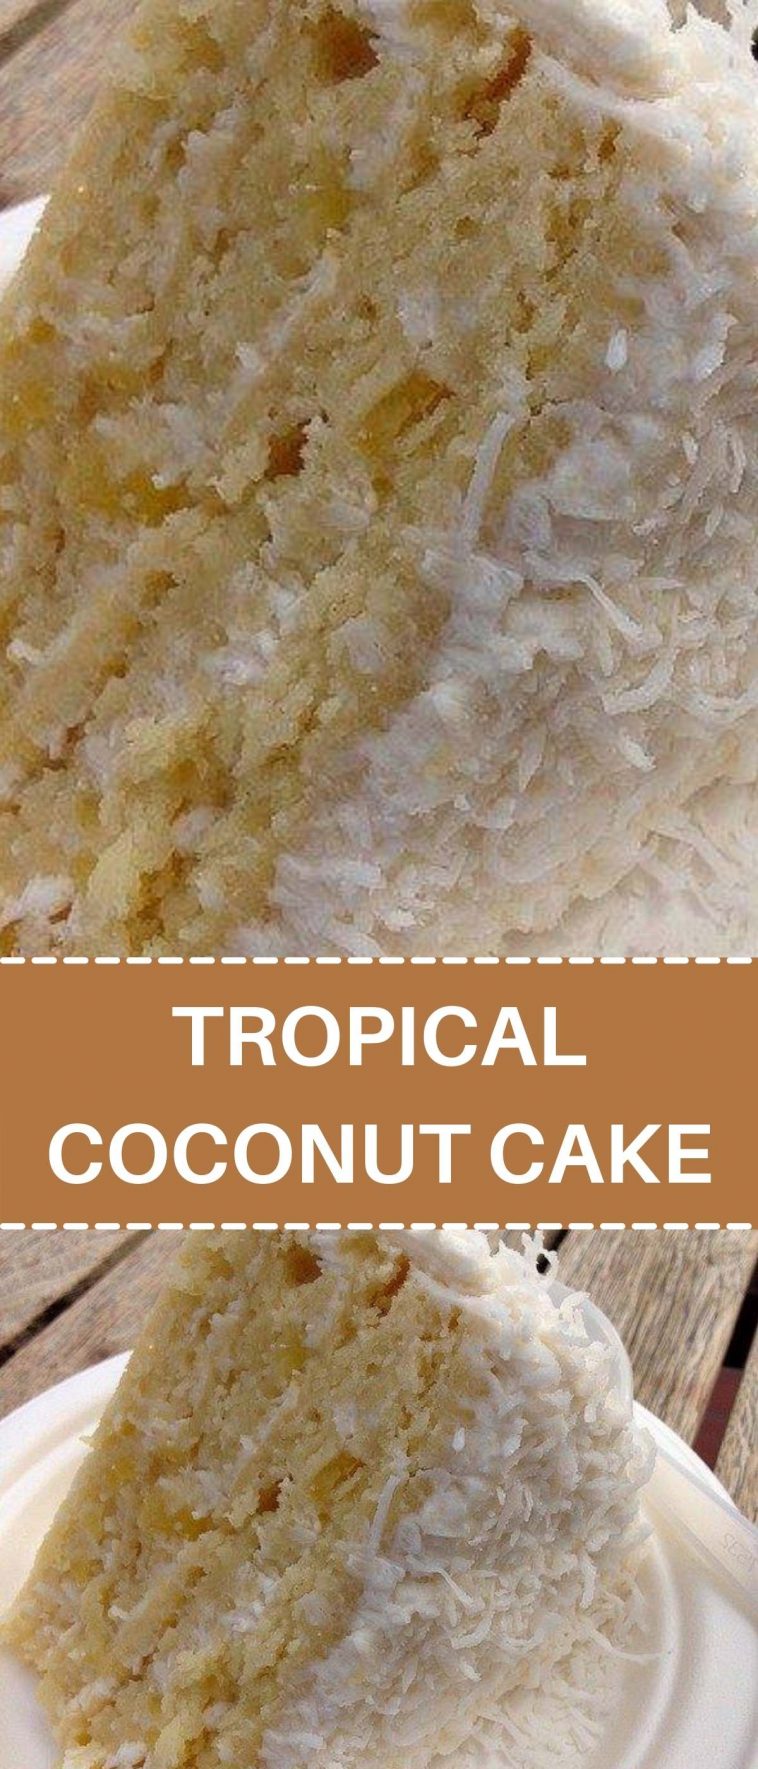 TROPICAL COCONUT CAKE